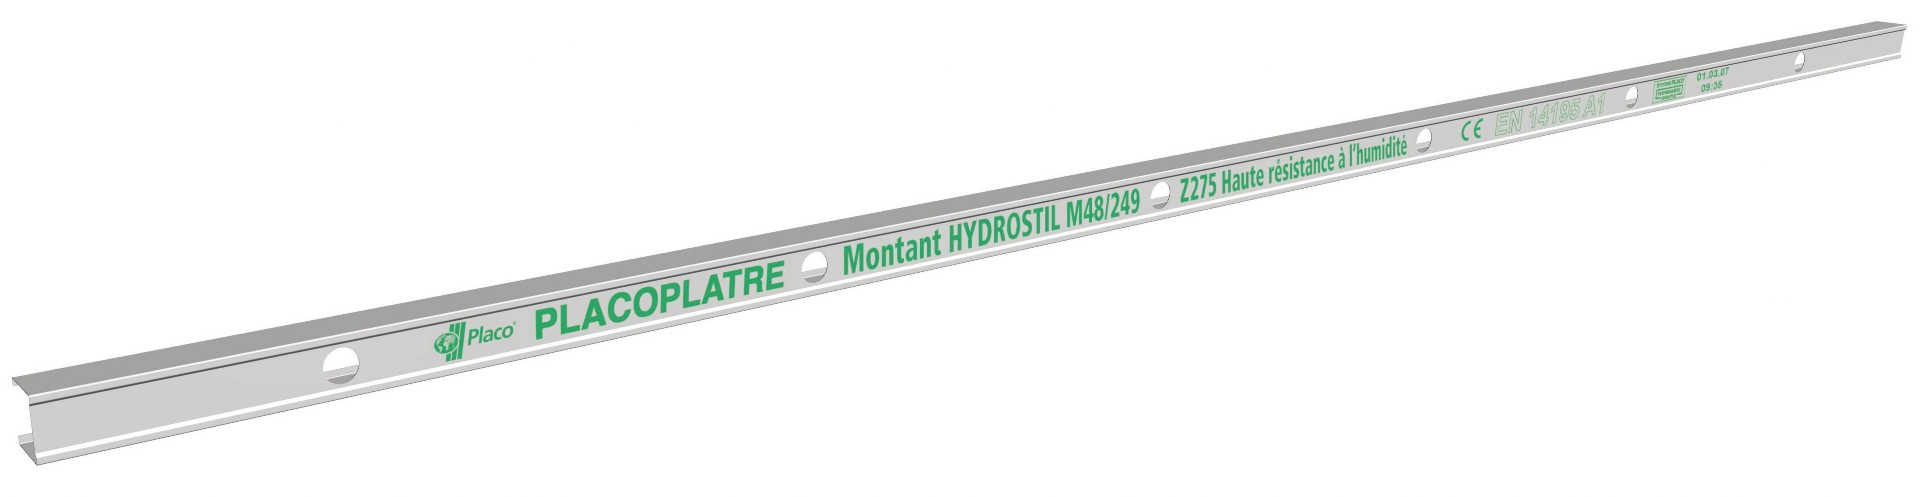 montant-metallique-stil-montant-hydrostil-m70-399-placoplat-0